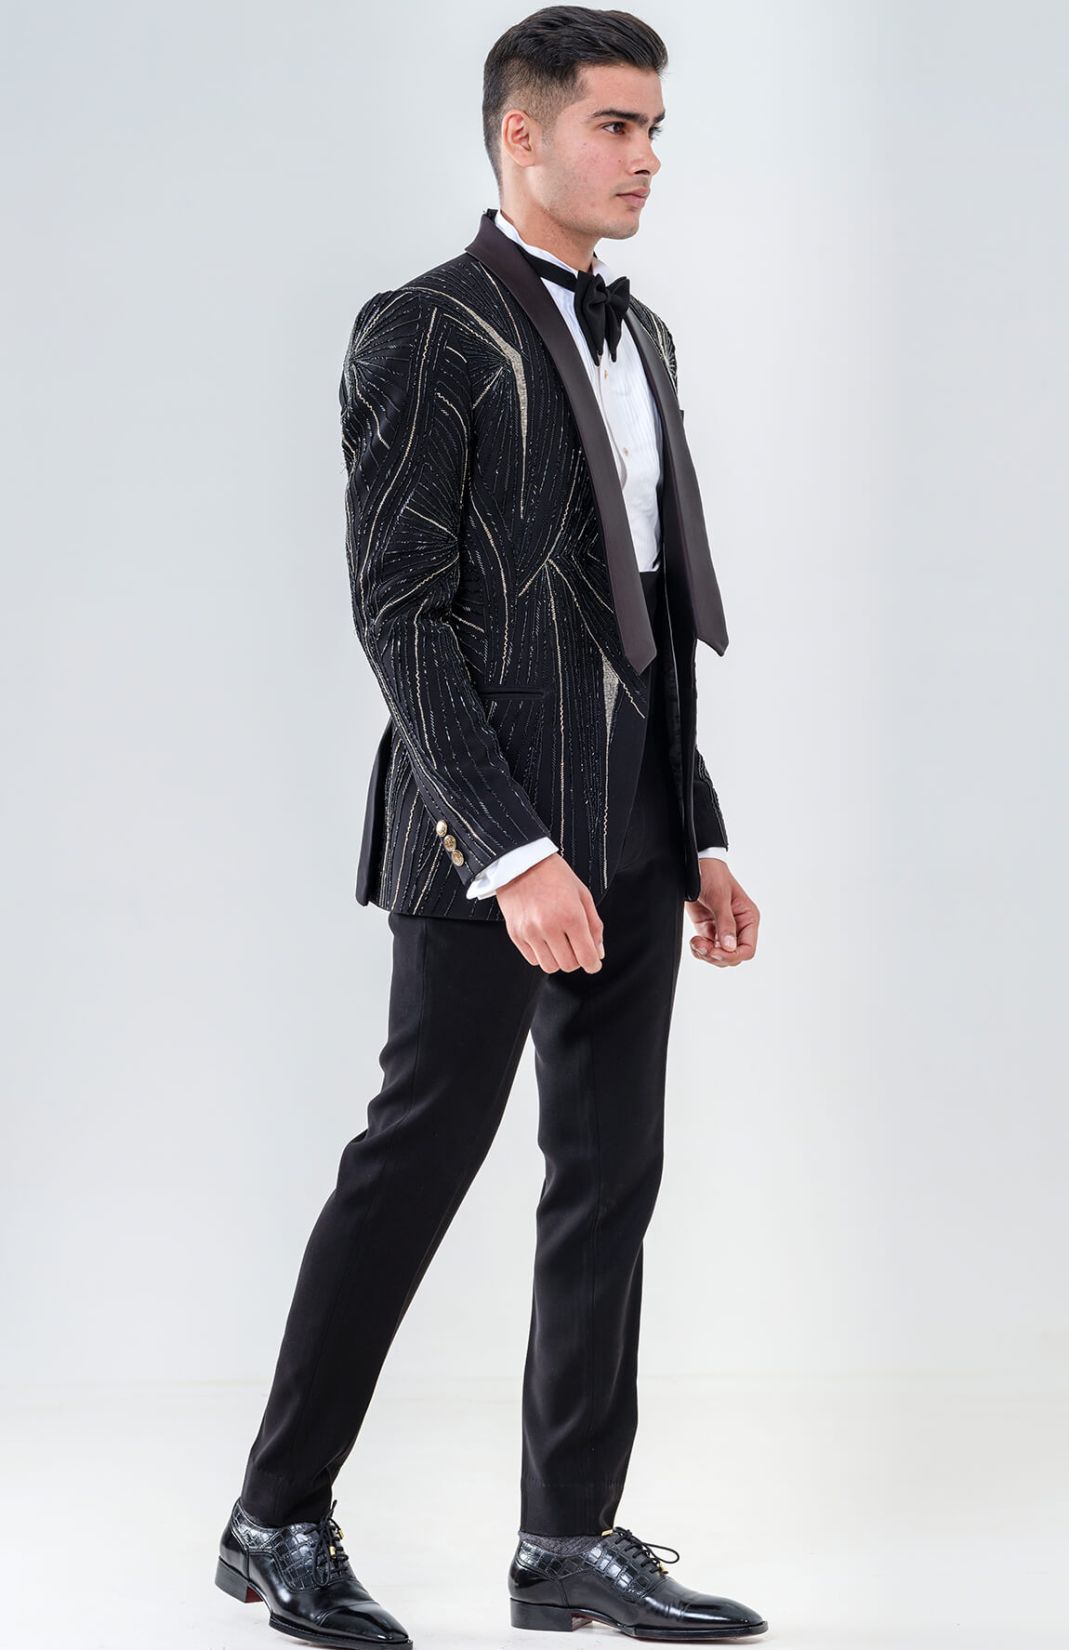 Silver & Black Cutdana Embellished  Tuxedo With Shawl Lapel